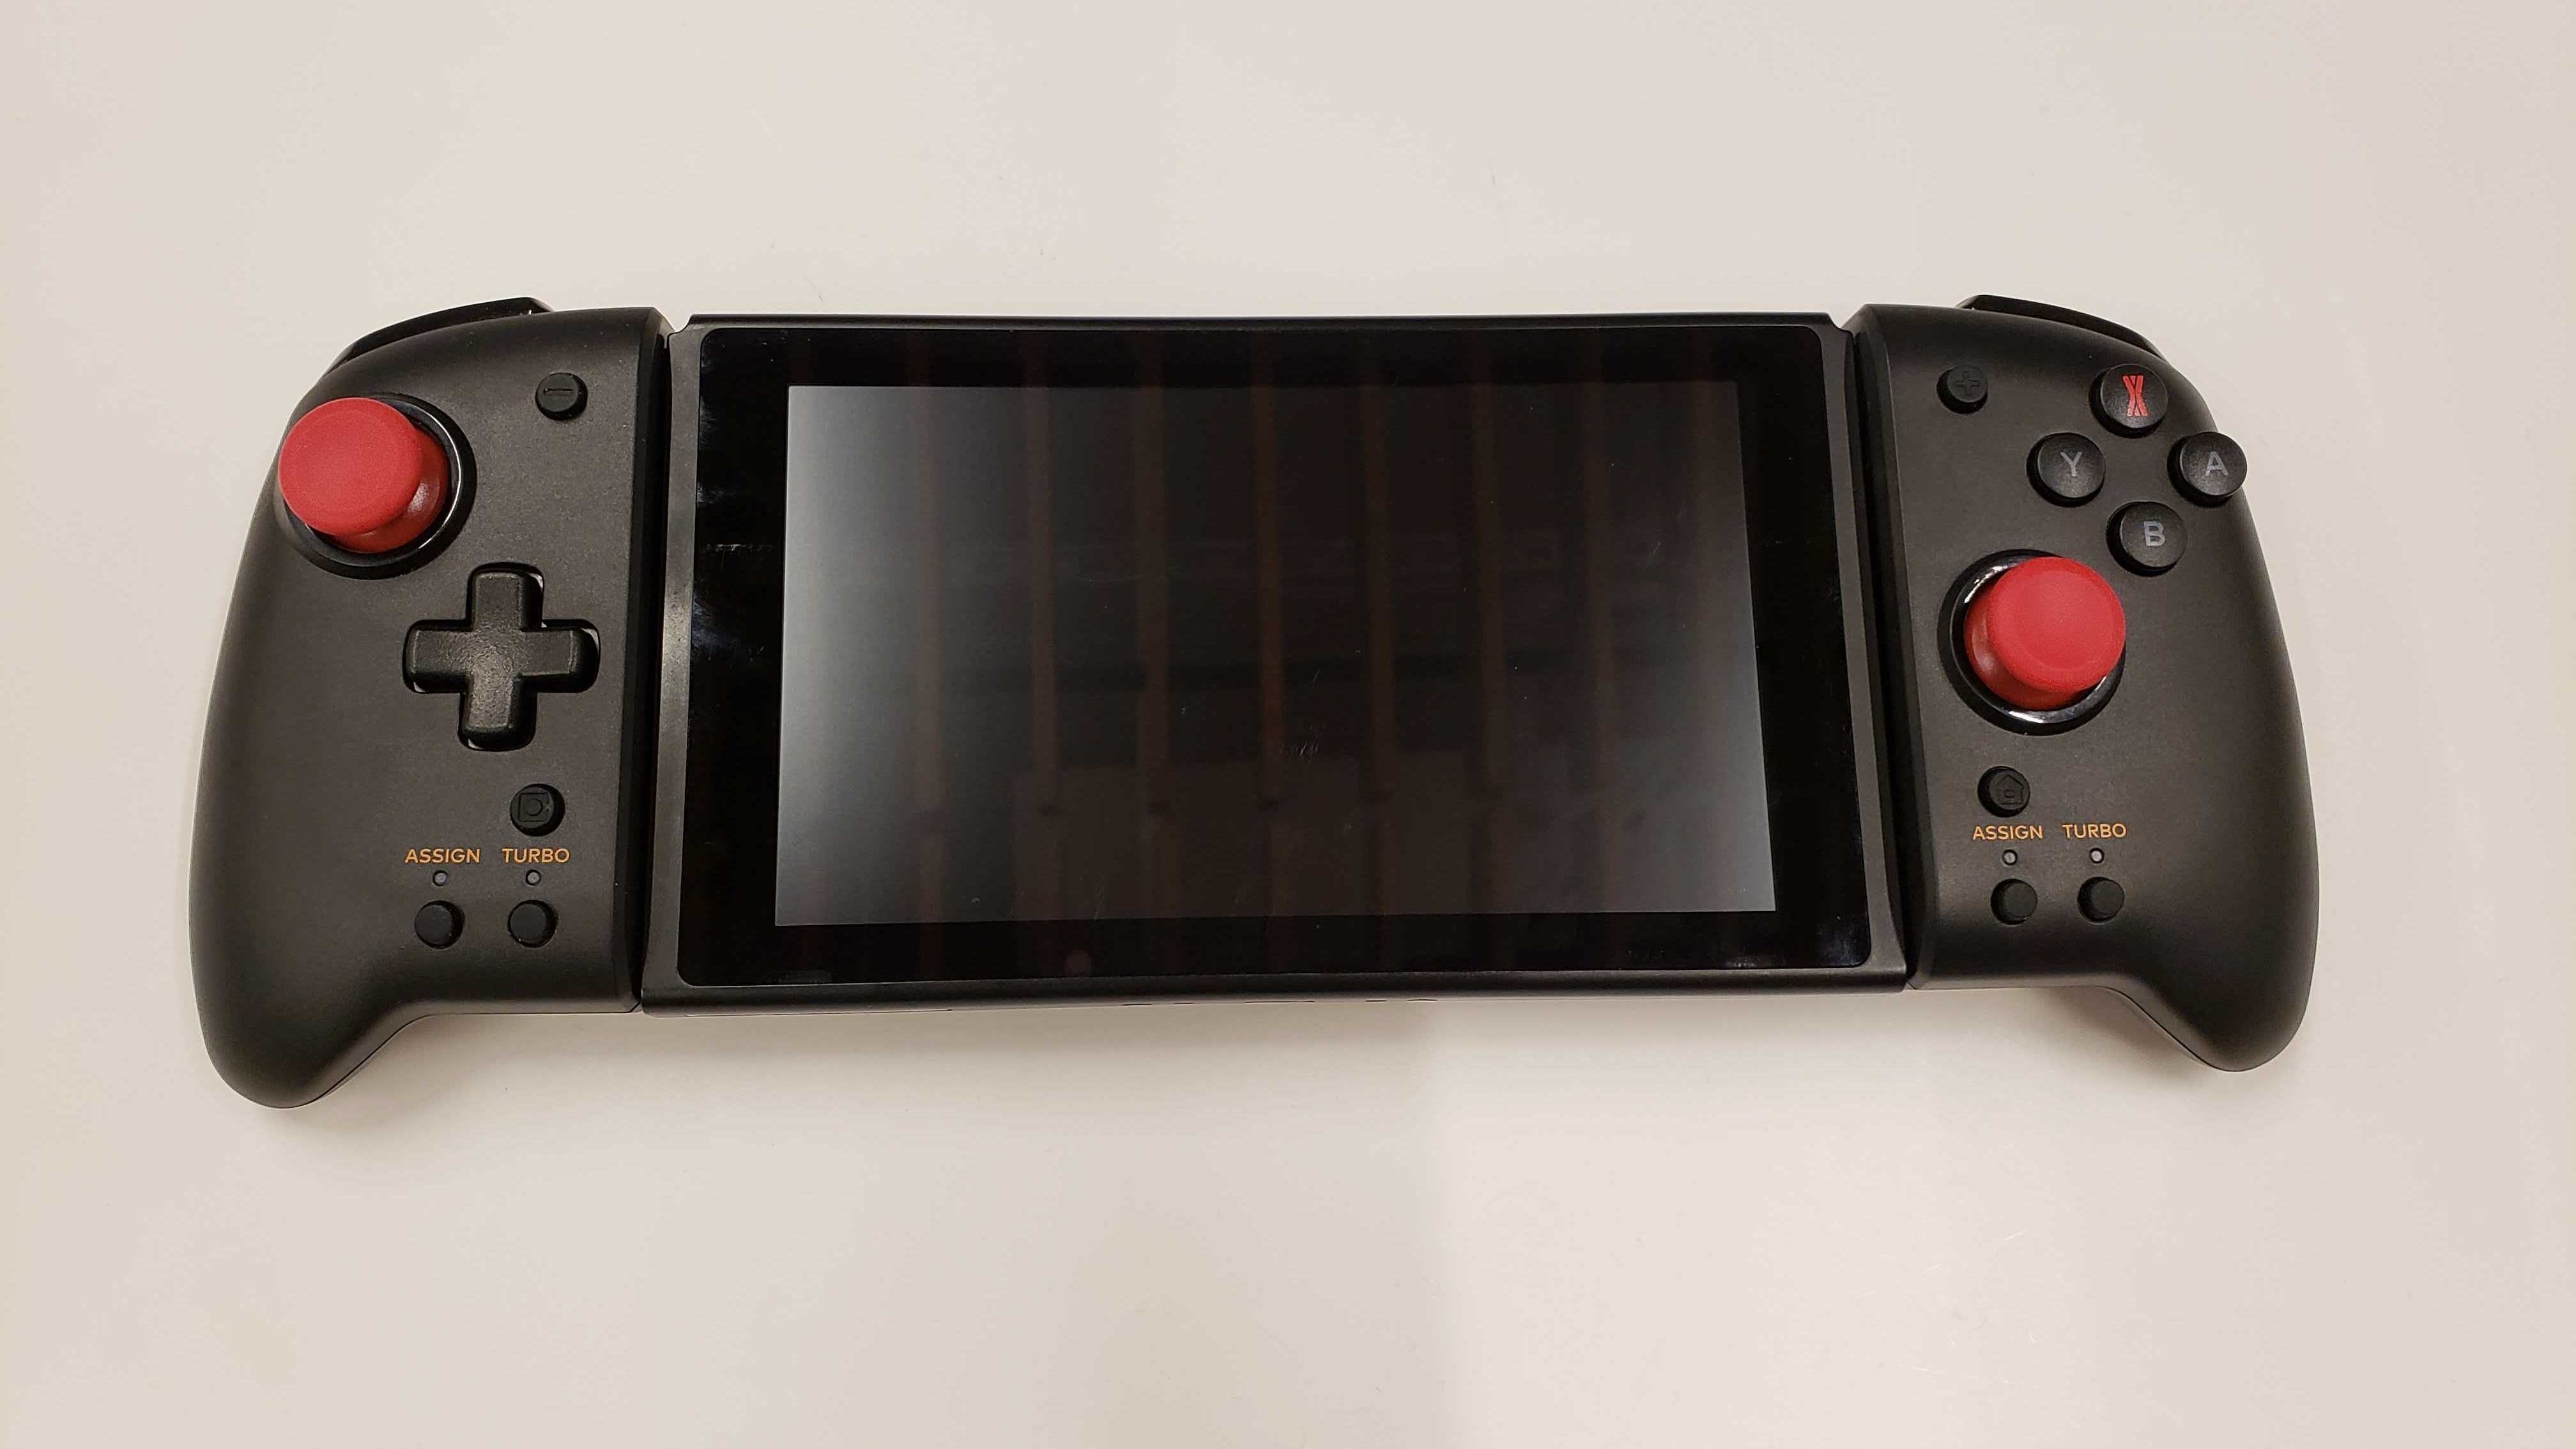 Nintendo Switch Split Pad Pro - Black